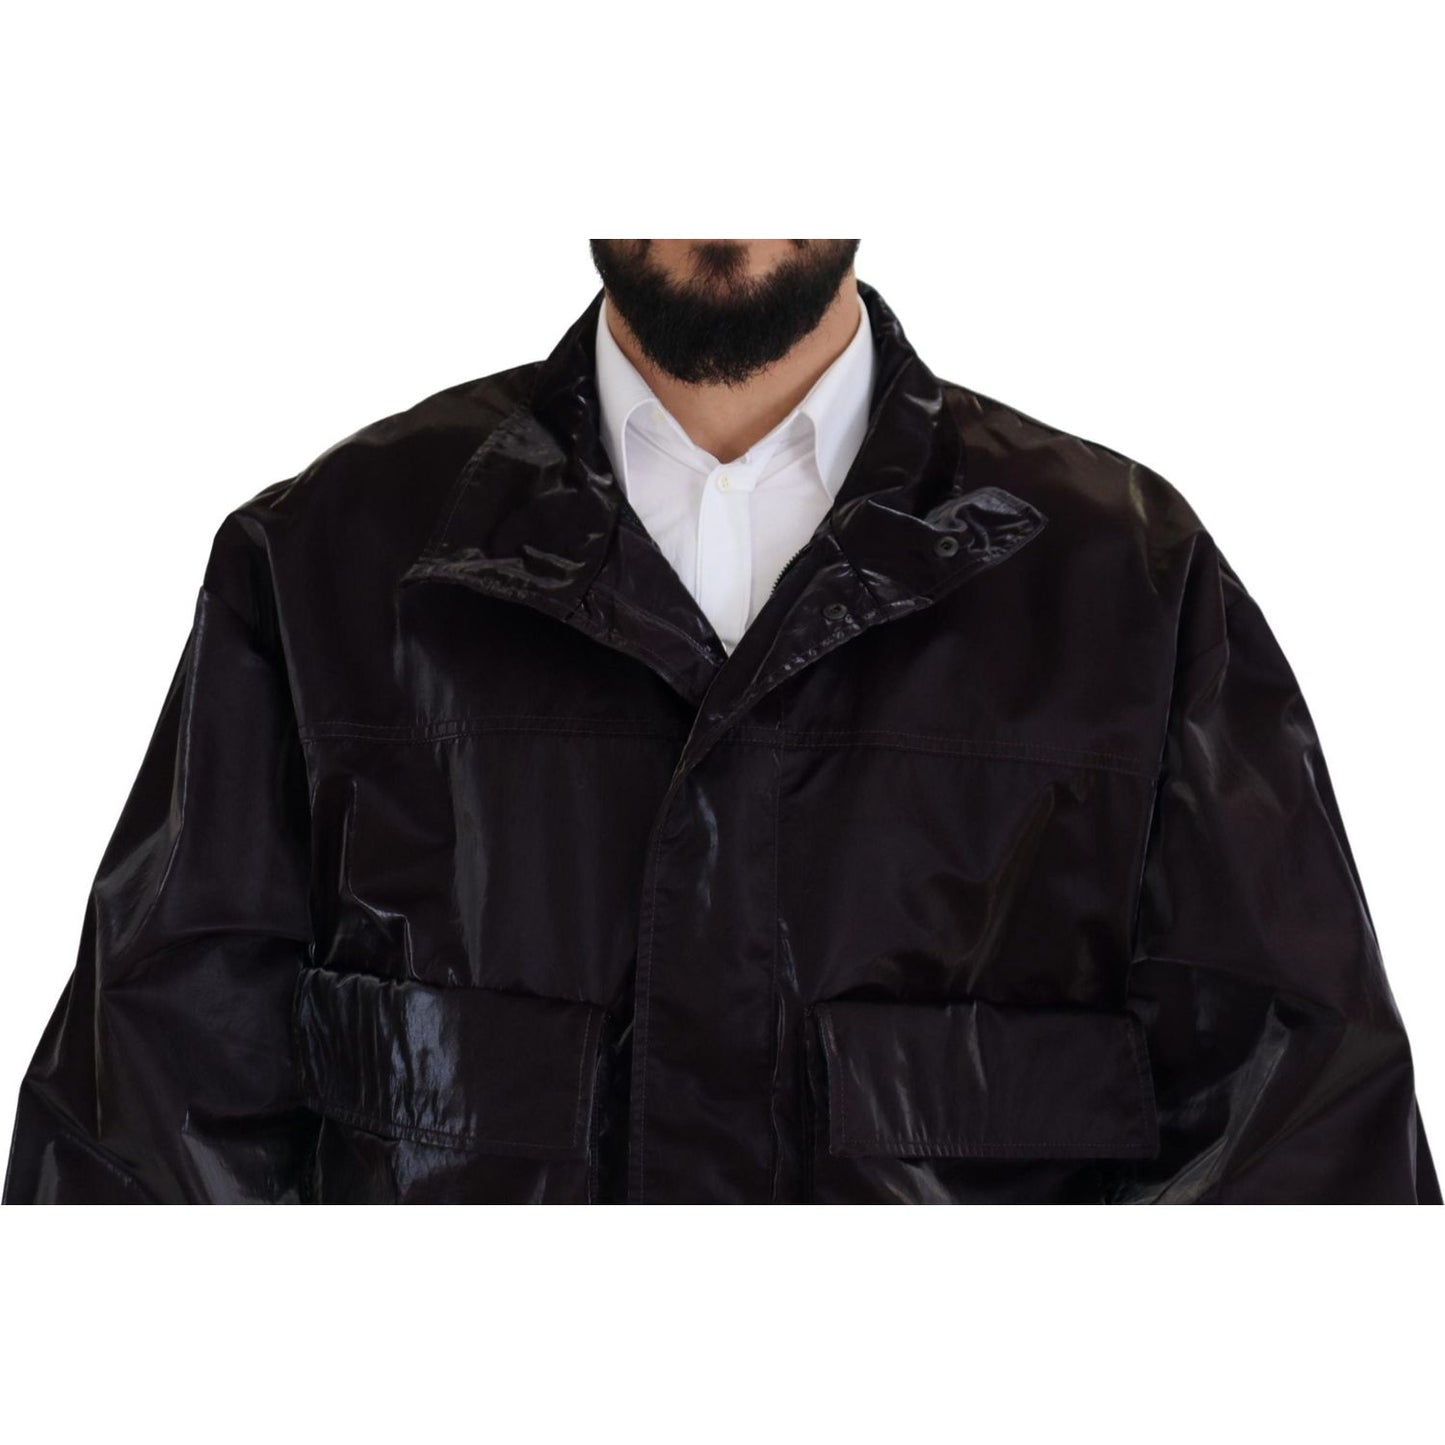 Dolce & Gabbana Elegant Bordeaux Collared Jacket bordeaux-nylon-collared-men-coat-jacket IMG_8279-scaled-8e67ae6f-6cb.jpg